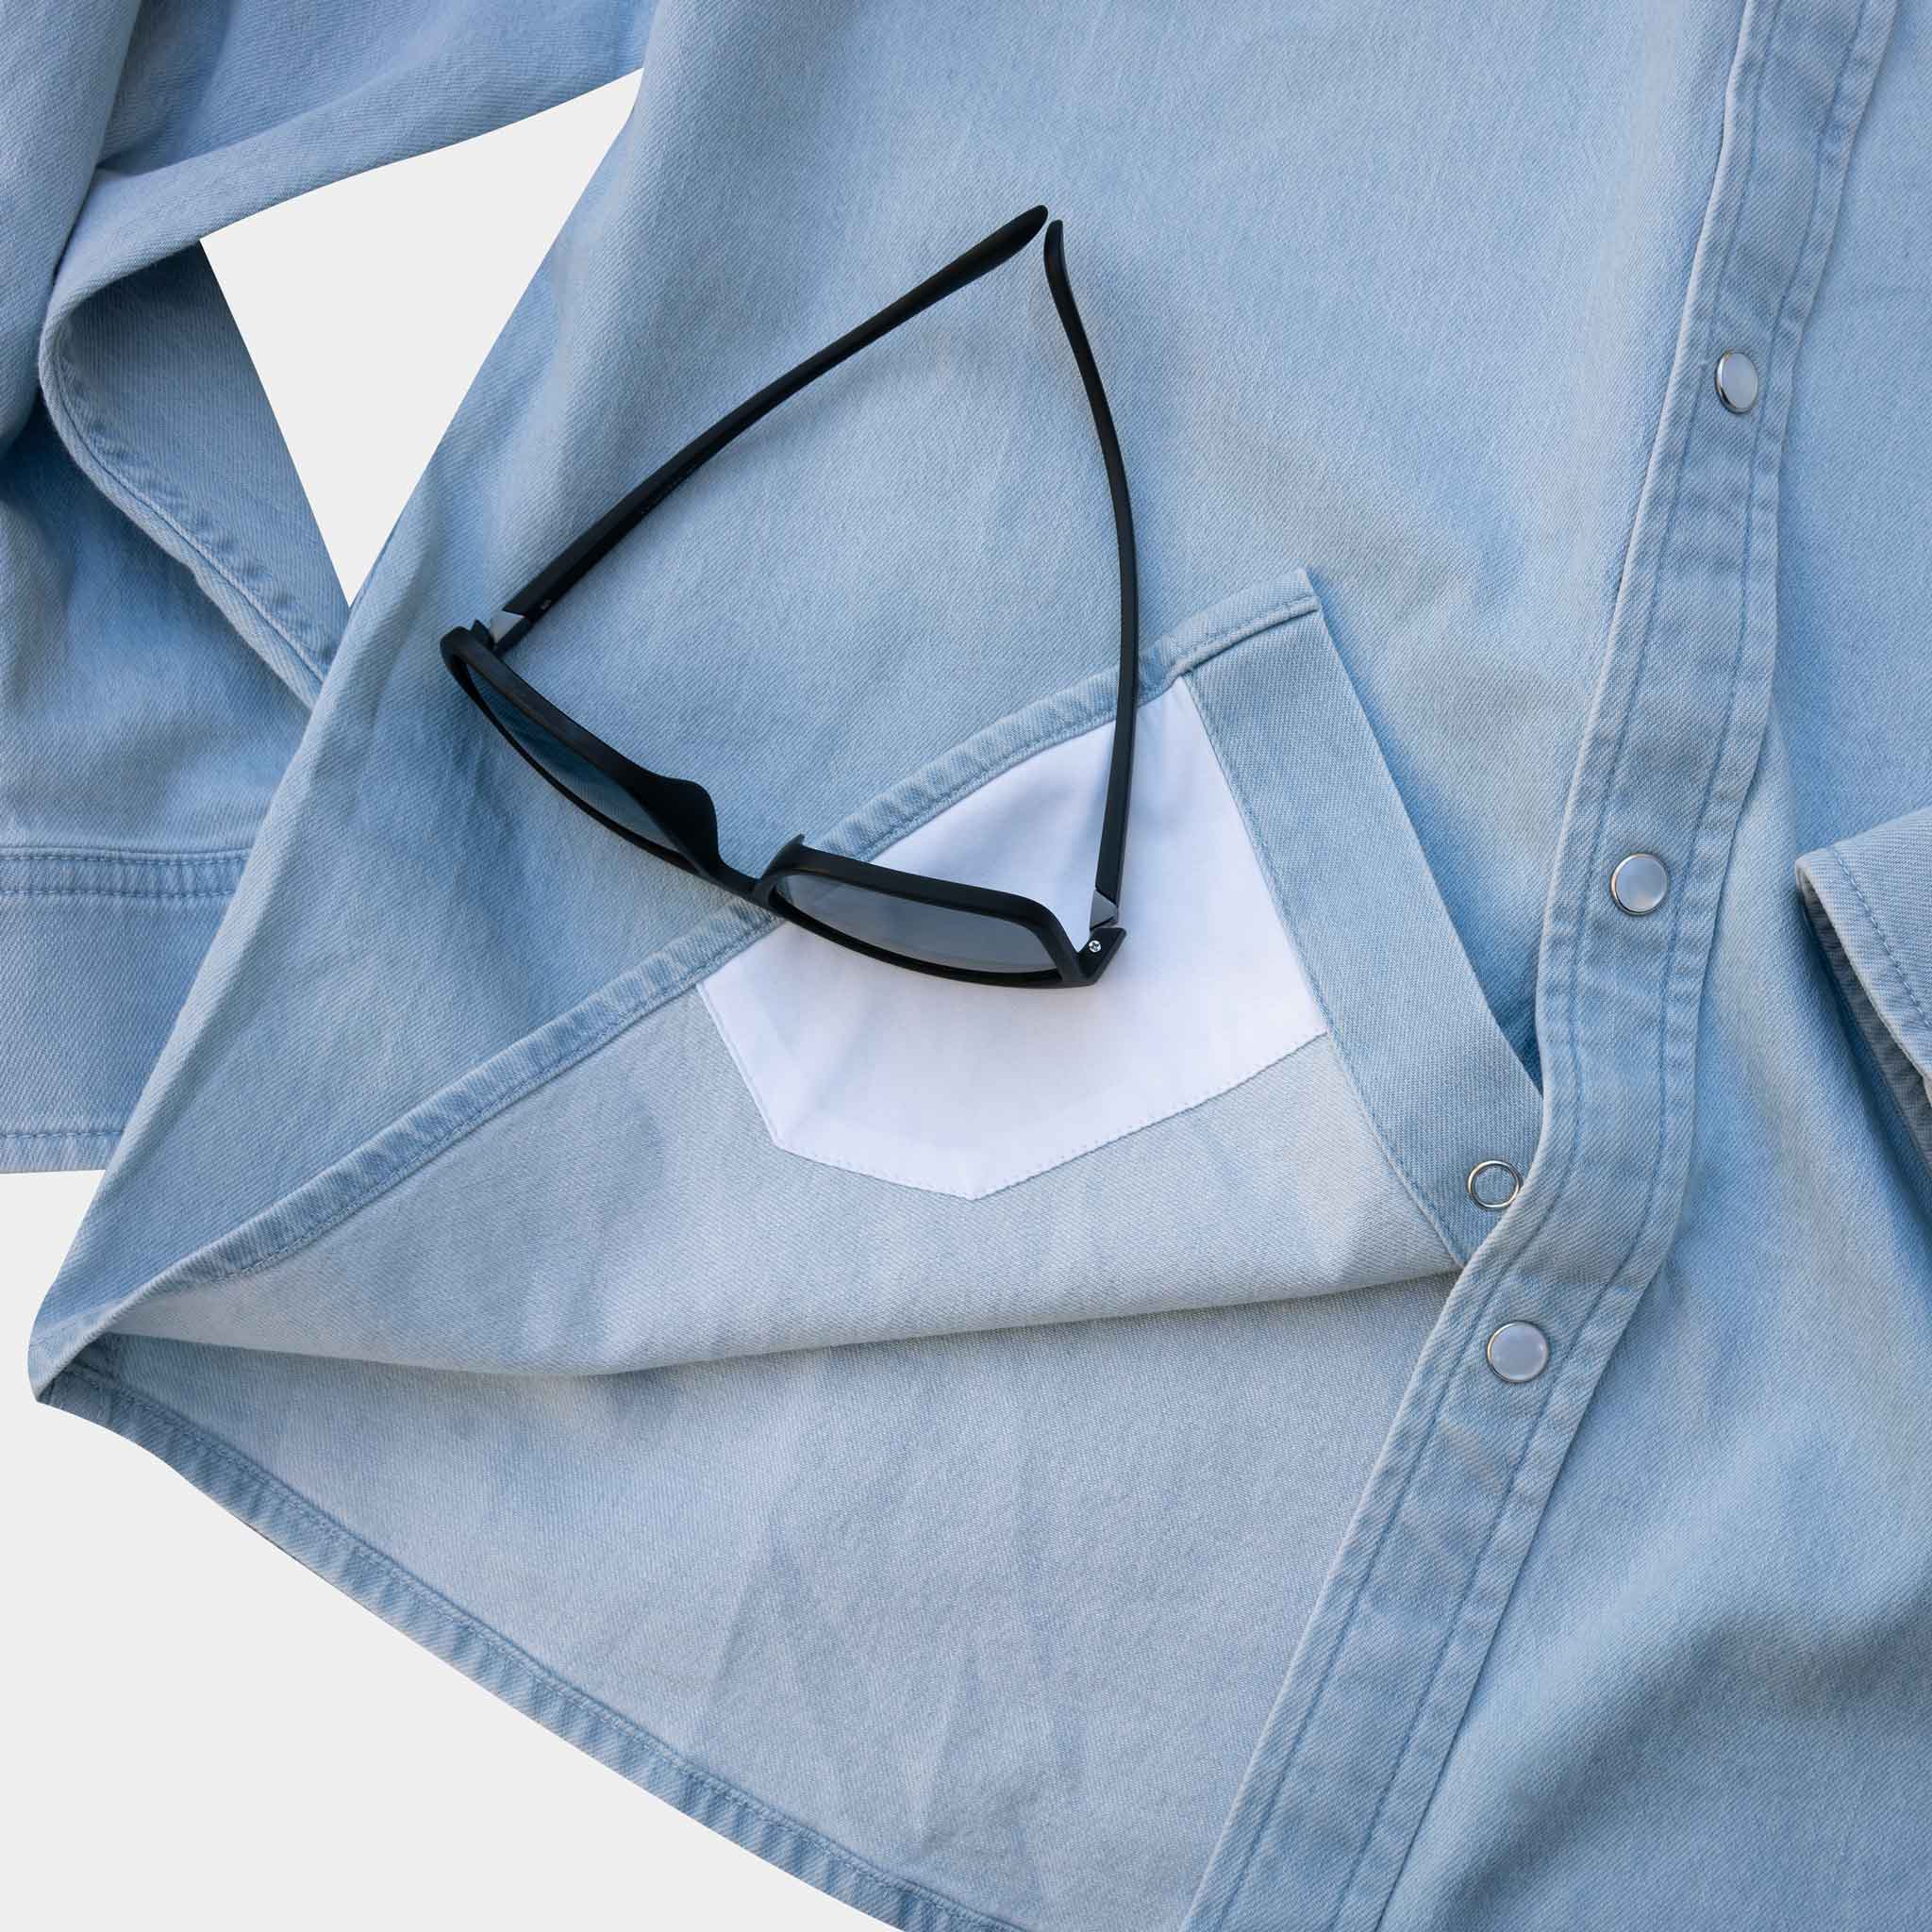 lens cloth on bottom of shirt